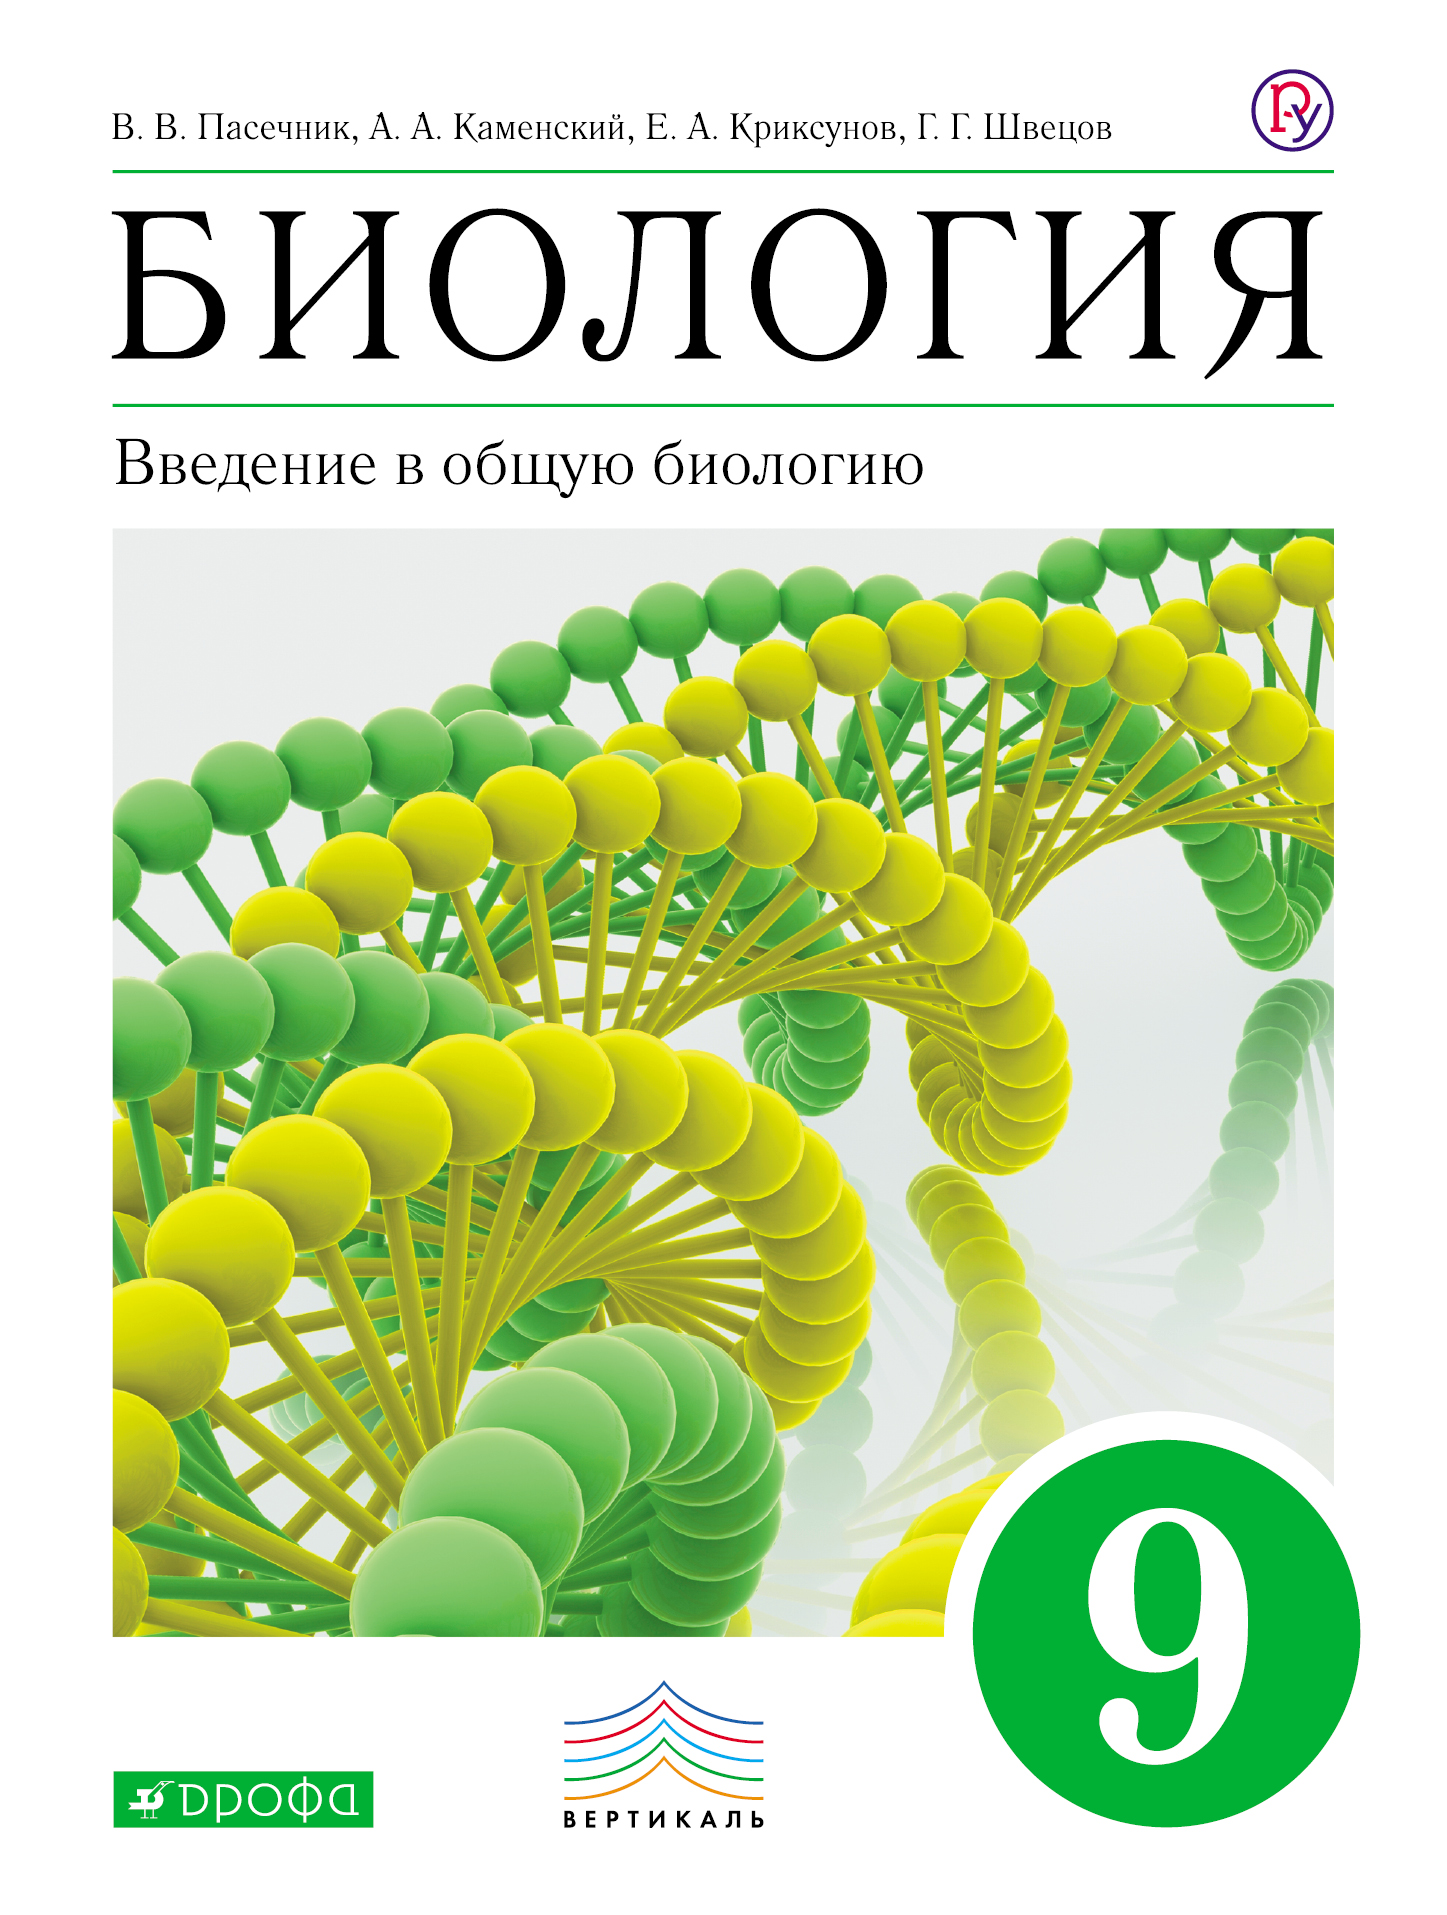 Биология учебники по ботаники и зоологии в формате аи